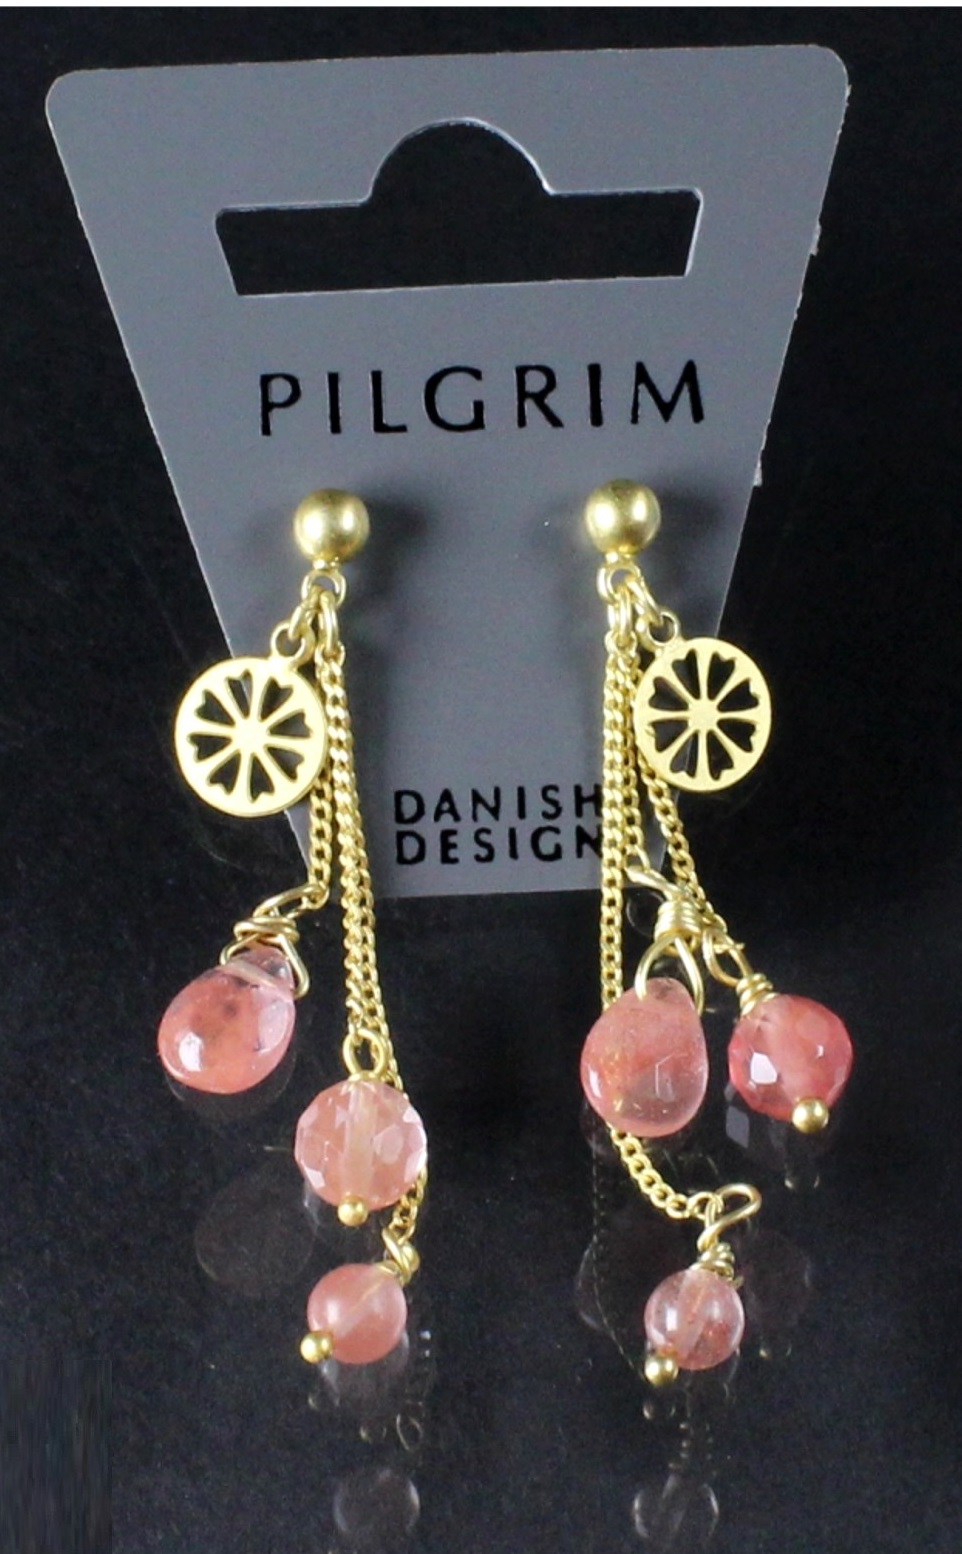 PILGRIM - Precious Moments - Drop Earrings - Gold Plate/Cherry Peach Quartz Stones BNWT